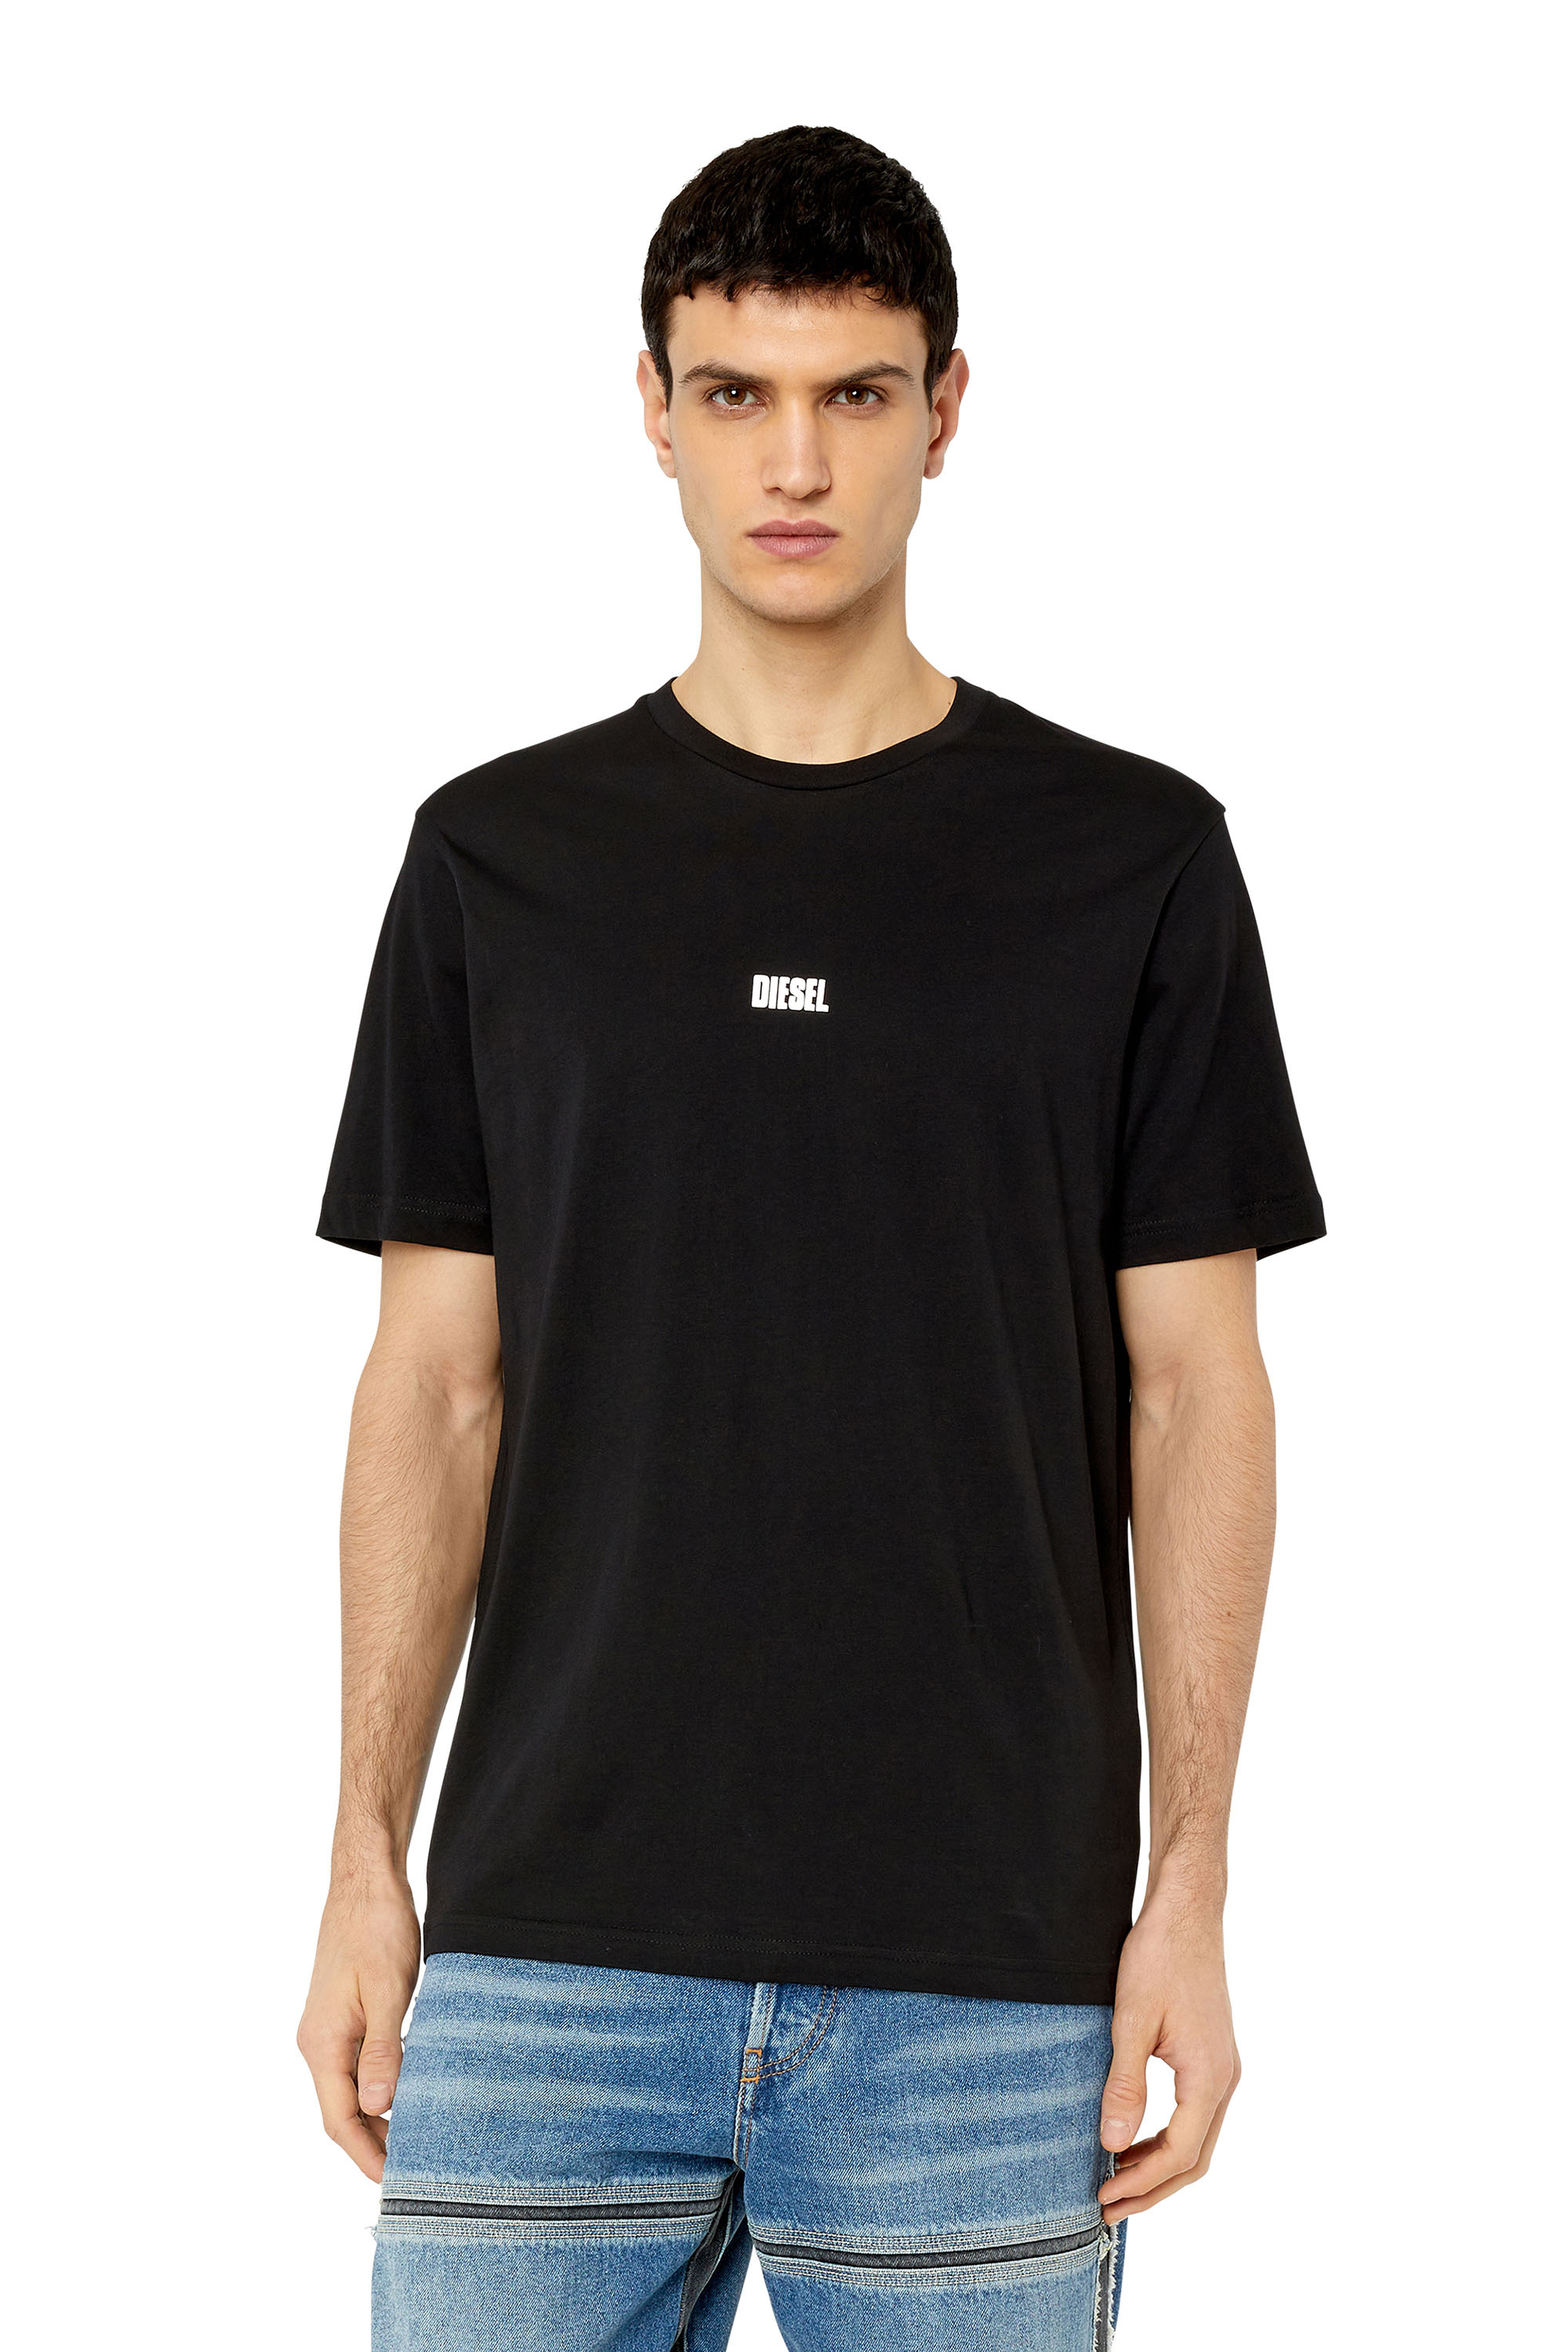 Diesel - T-JUST-G23, Man T-shirt with puff Diesel logo in Black - Image 1